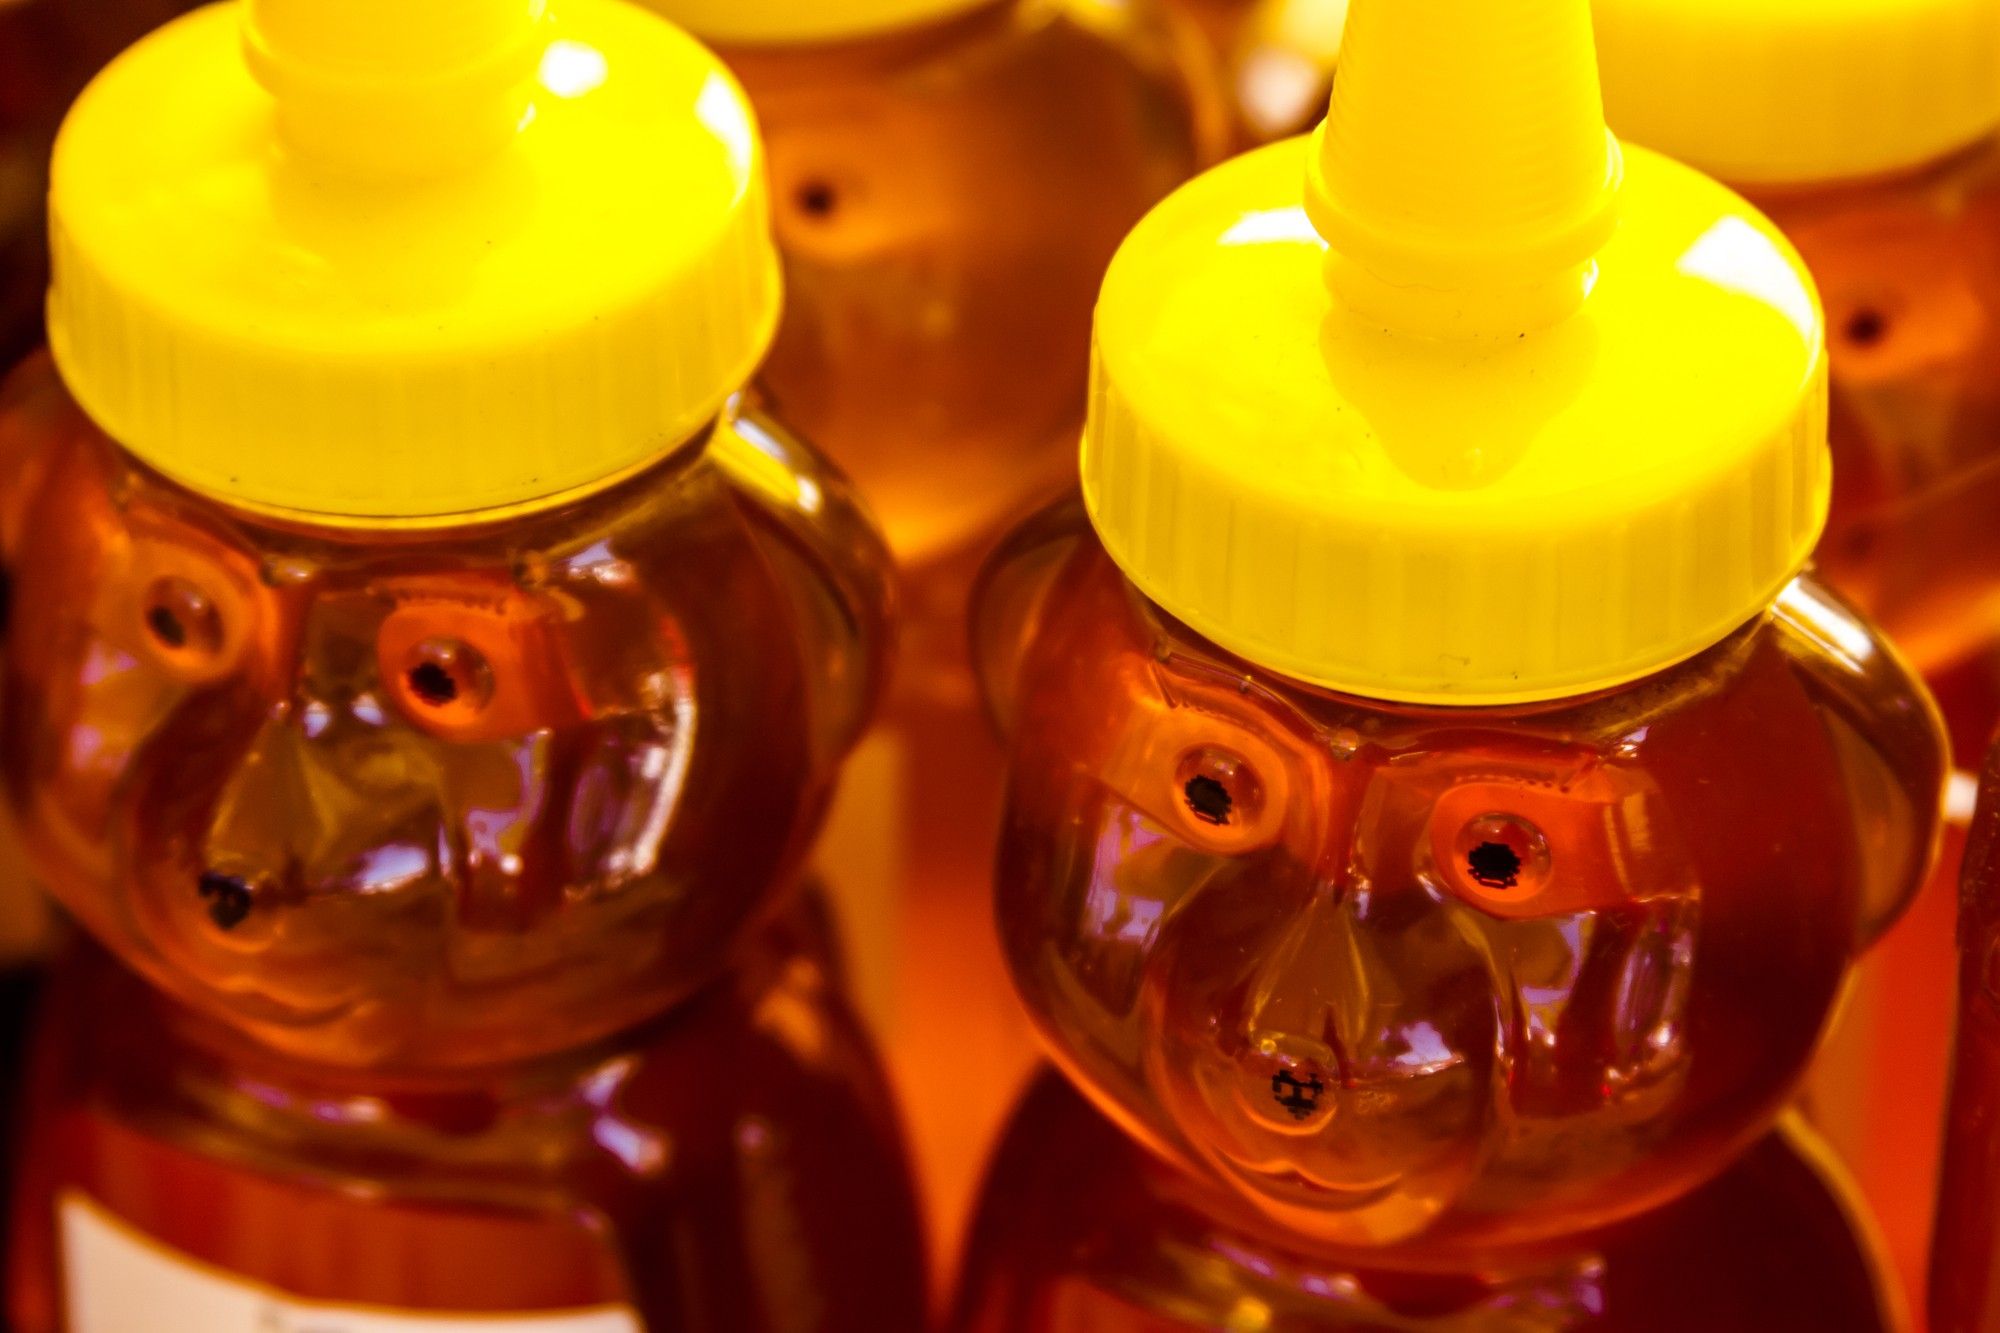 Honey bottles regarding fake honey reports